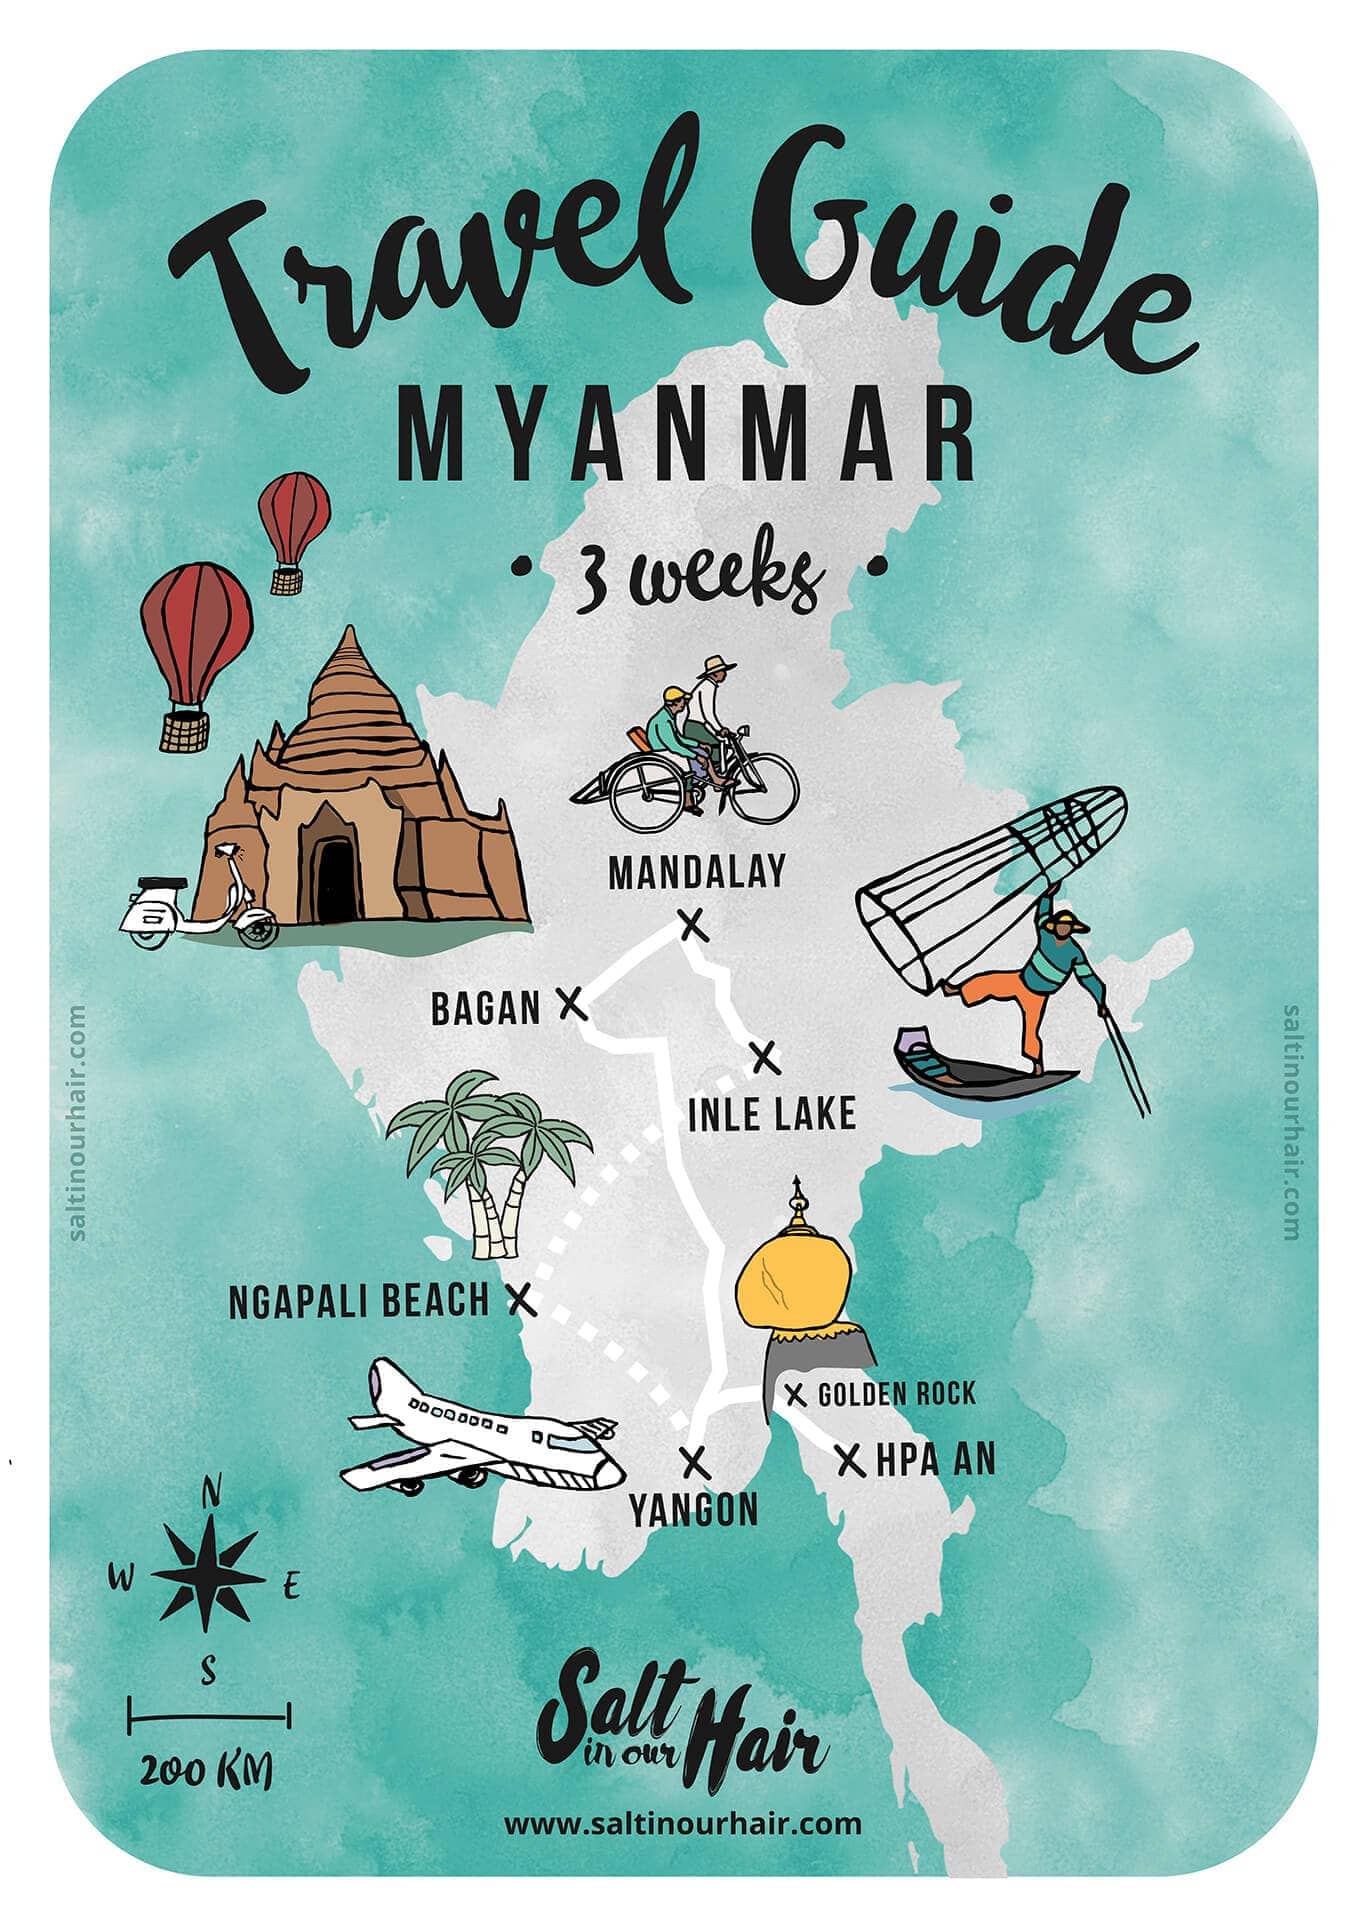 myanmar tourist map